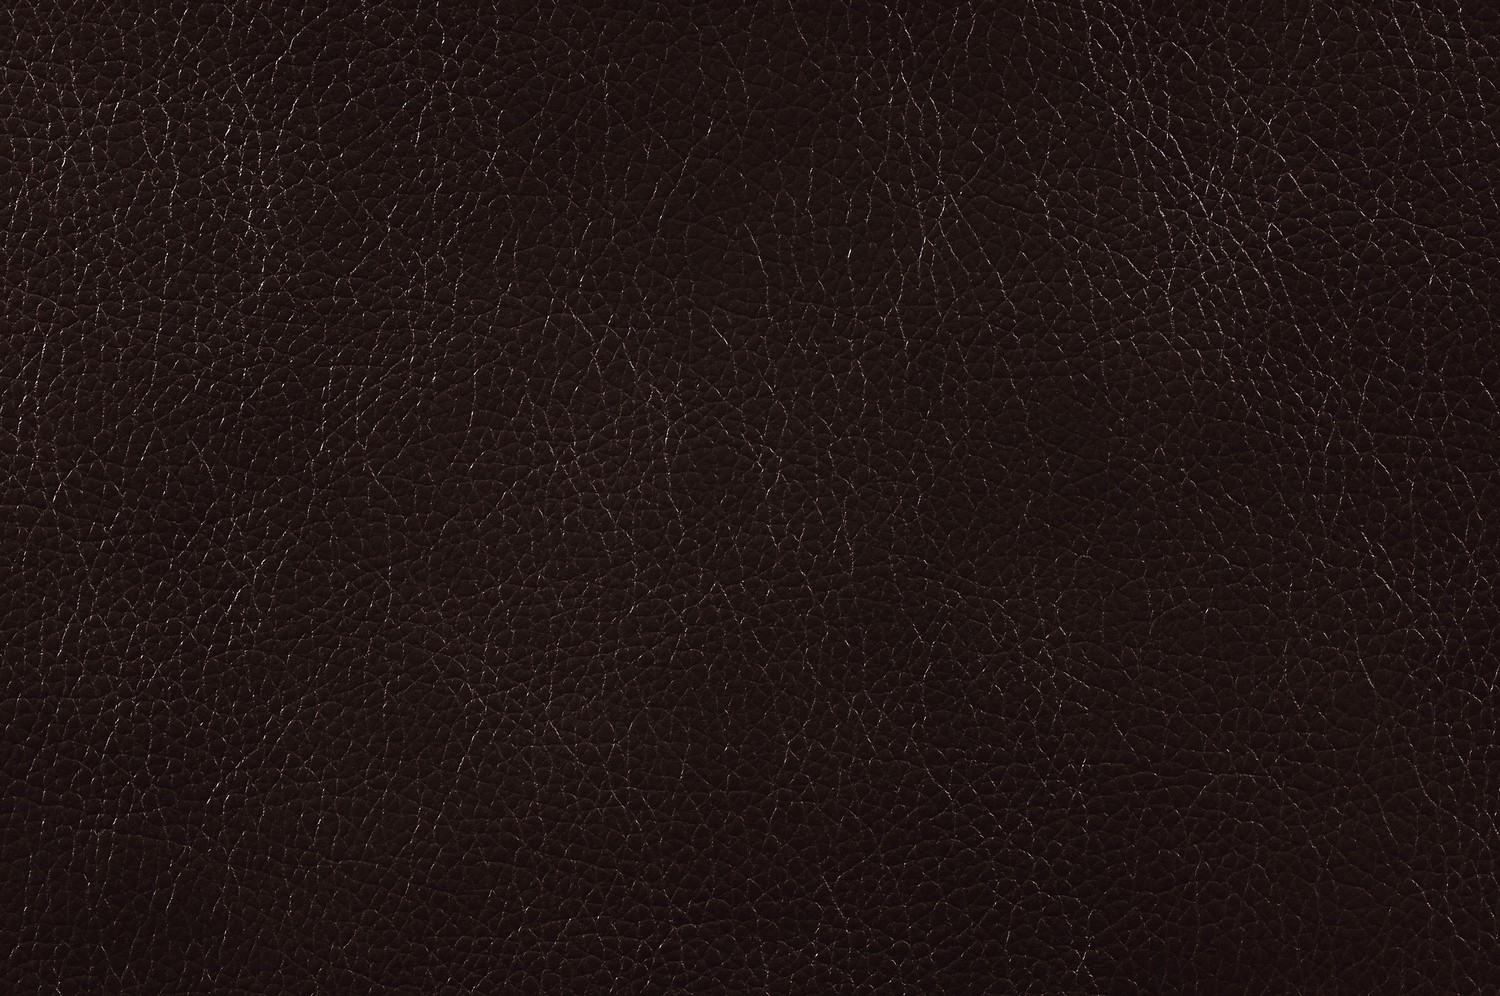 Homelegance Pecos Double Reclining Sofa - Leather Gel Match - Dark Brown